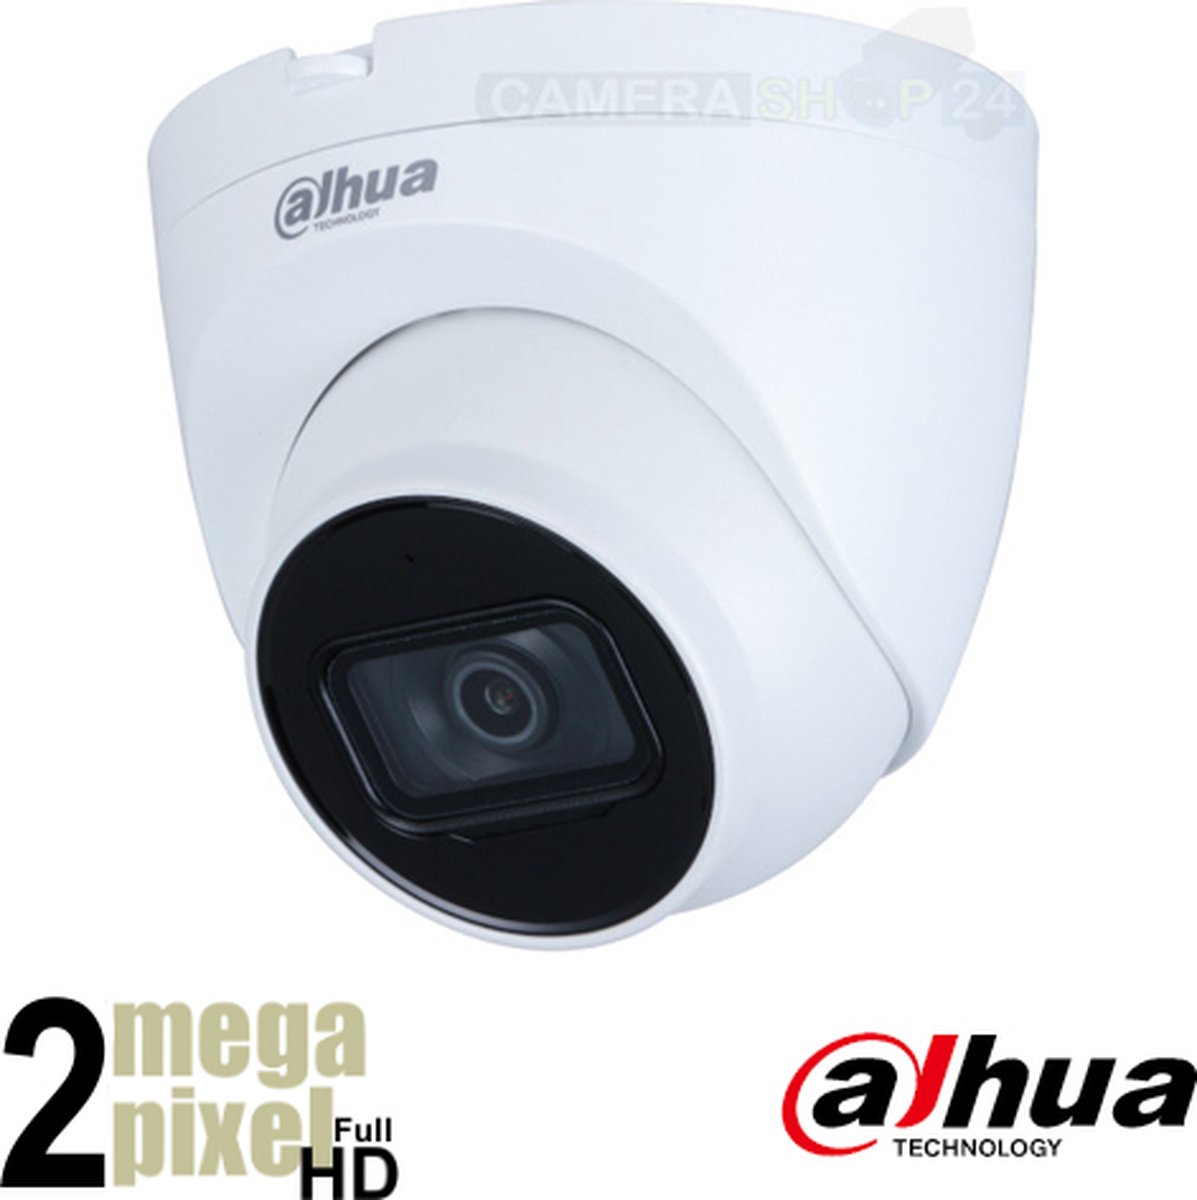 Dahua Full HD IP dome camera - 2.8mm lens - starlight - SD-kaart slot